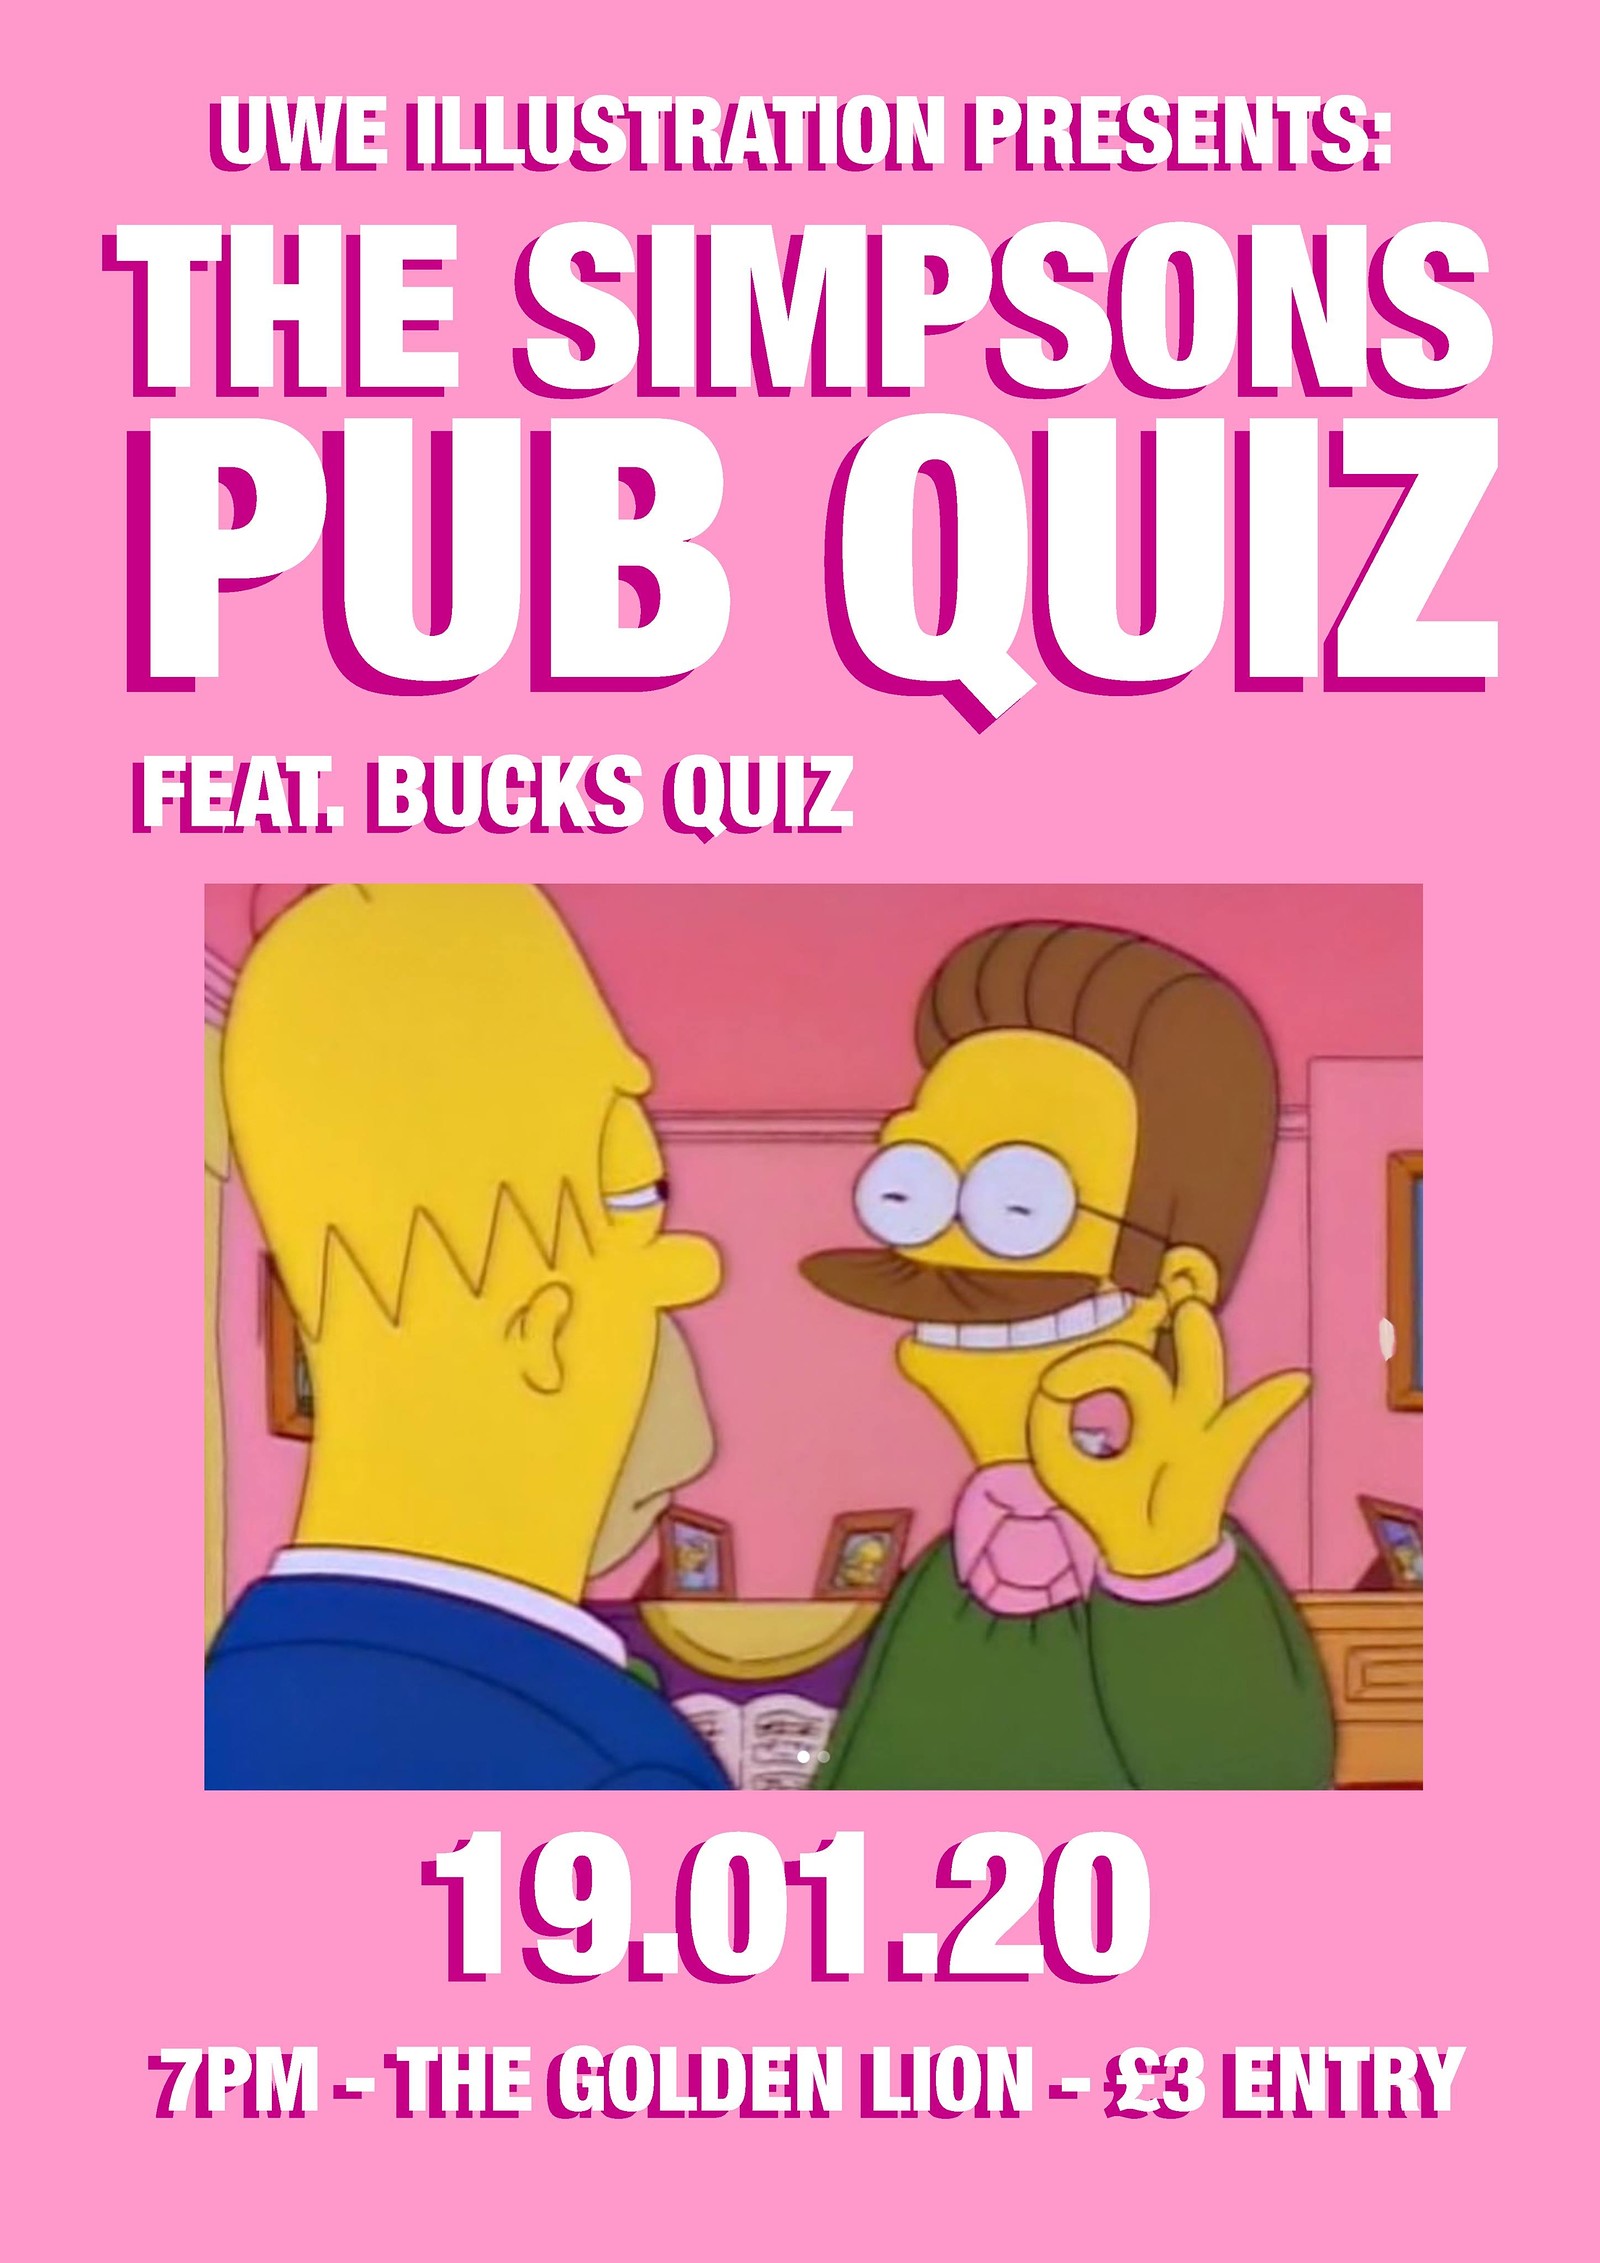 Bucks Quizz Presents: The Simpsons Pub Quiz at The Golden Lion